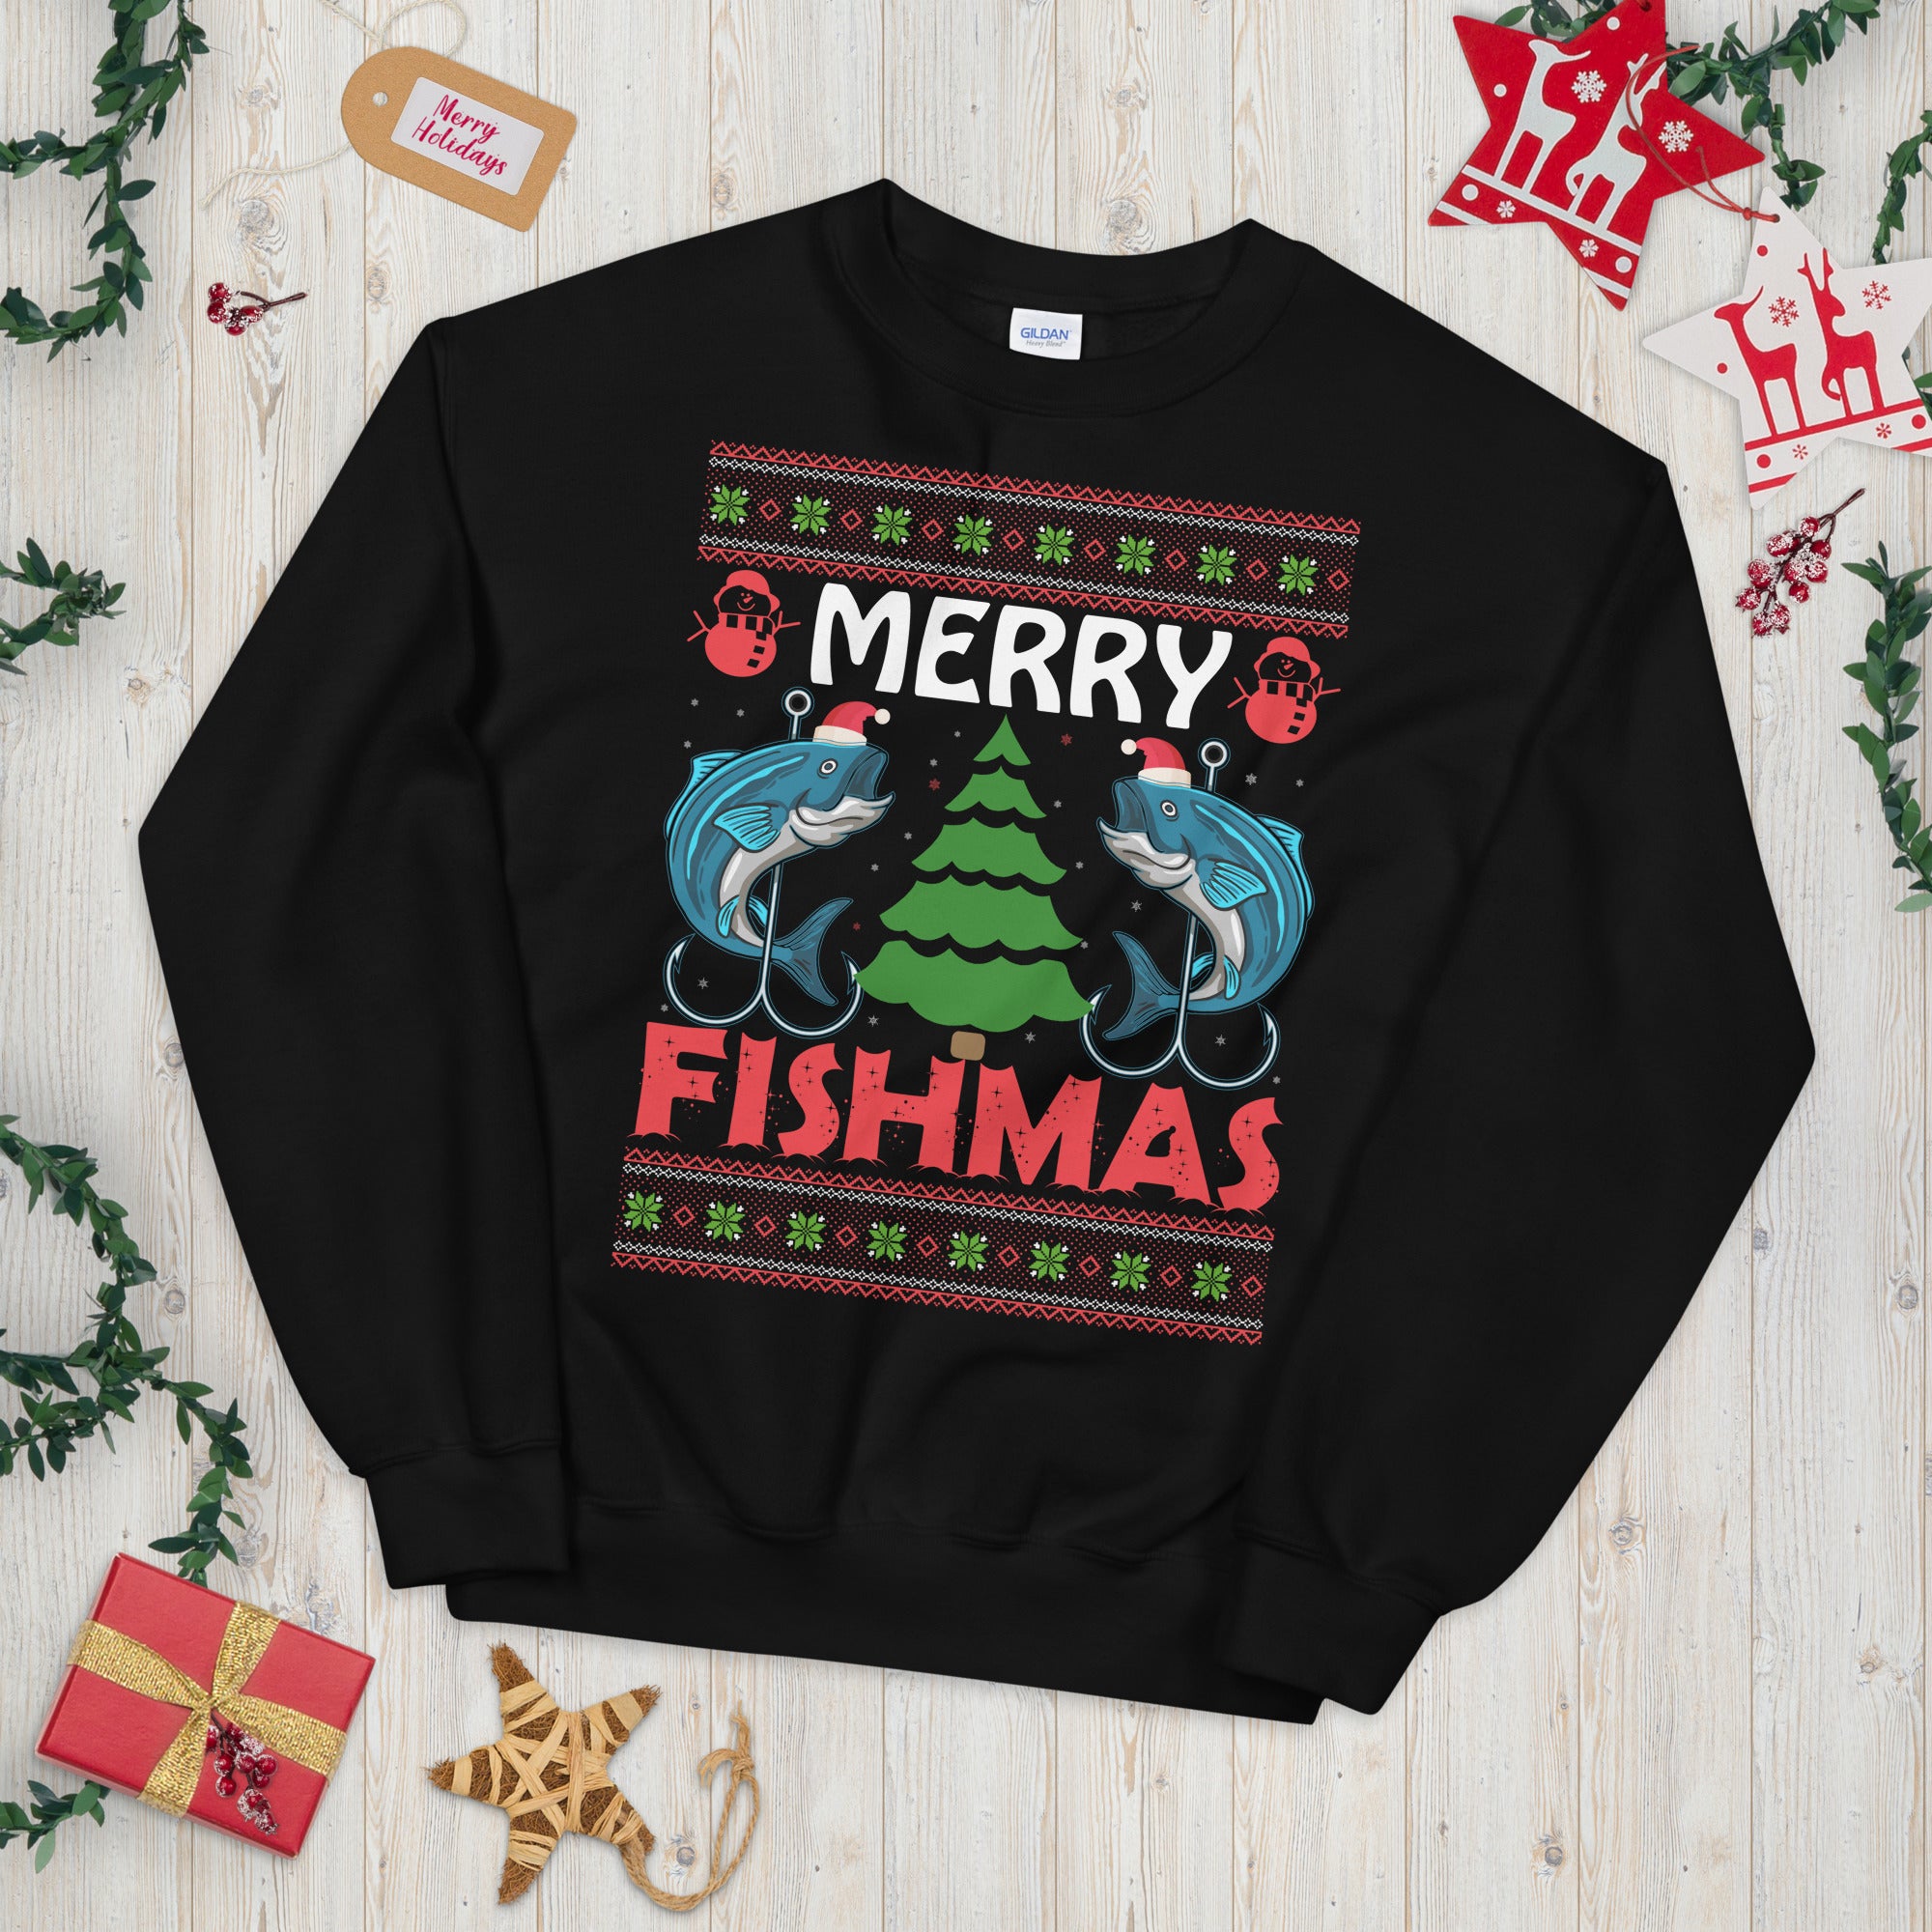 Merry Fishmas Ugly Christmas Sweater, Ugly Christmas Fishing Shirts, Fisherman Xmas Gift, Fishing Christmas Sweatshirt, Holiday Fishing Gift